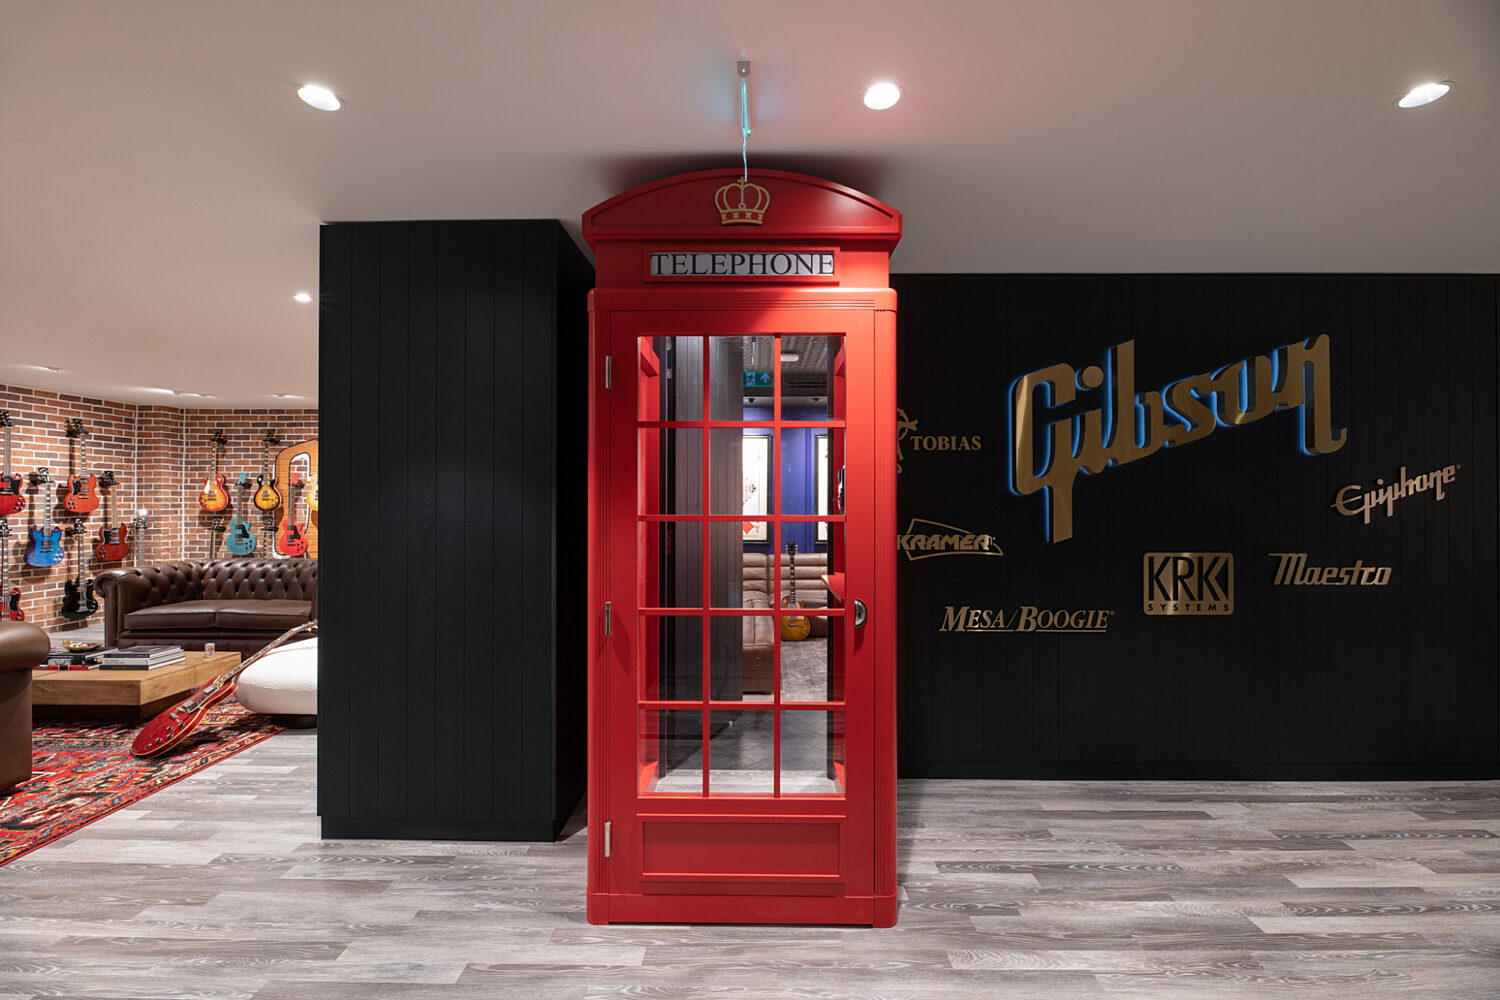 London phonebox in Gibson showroom